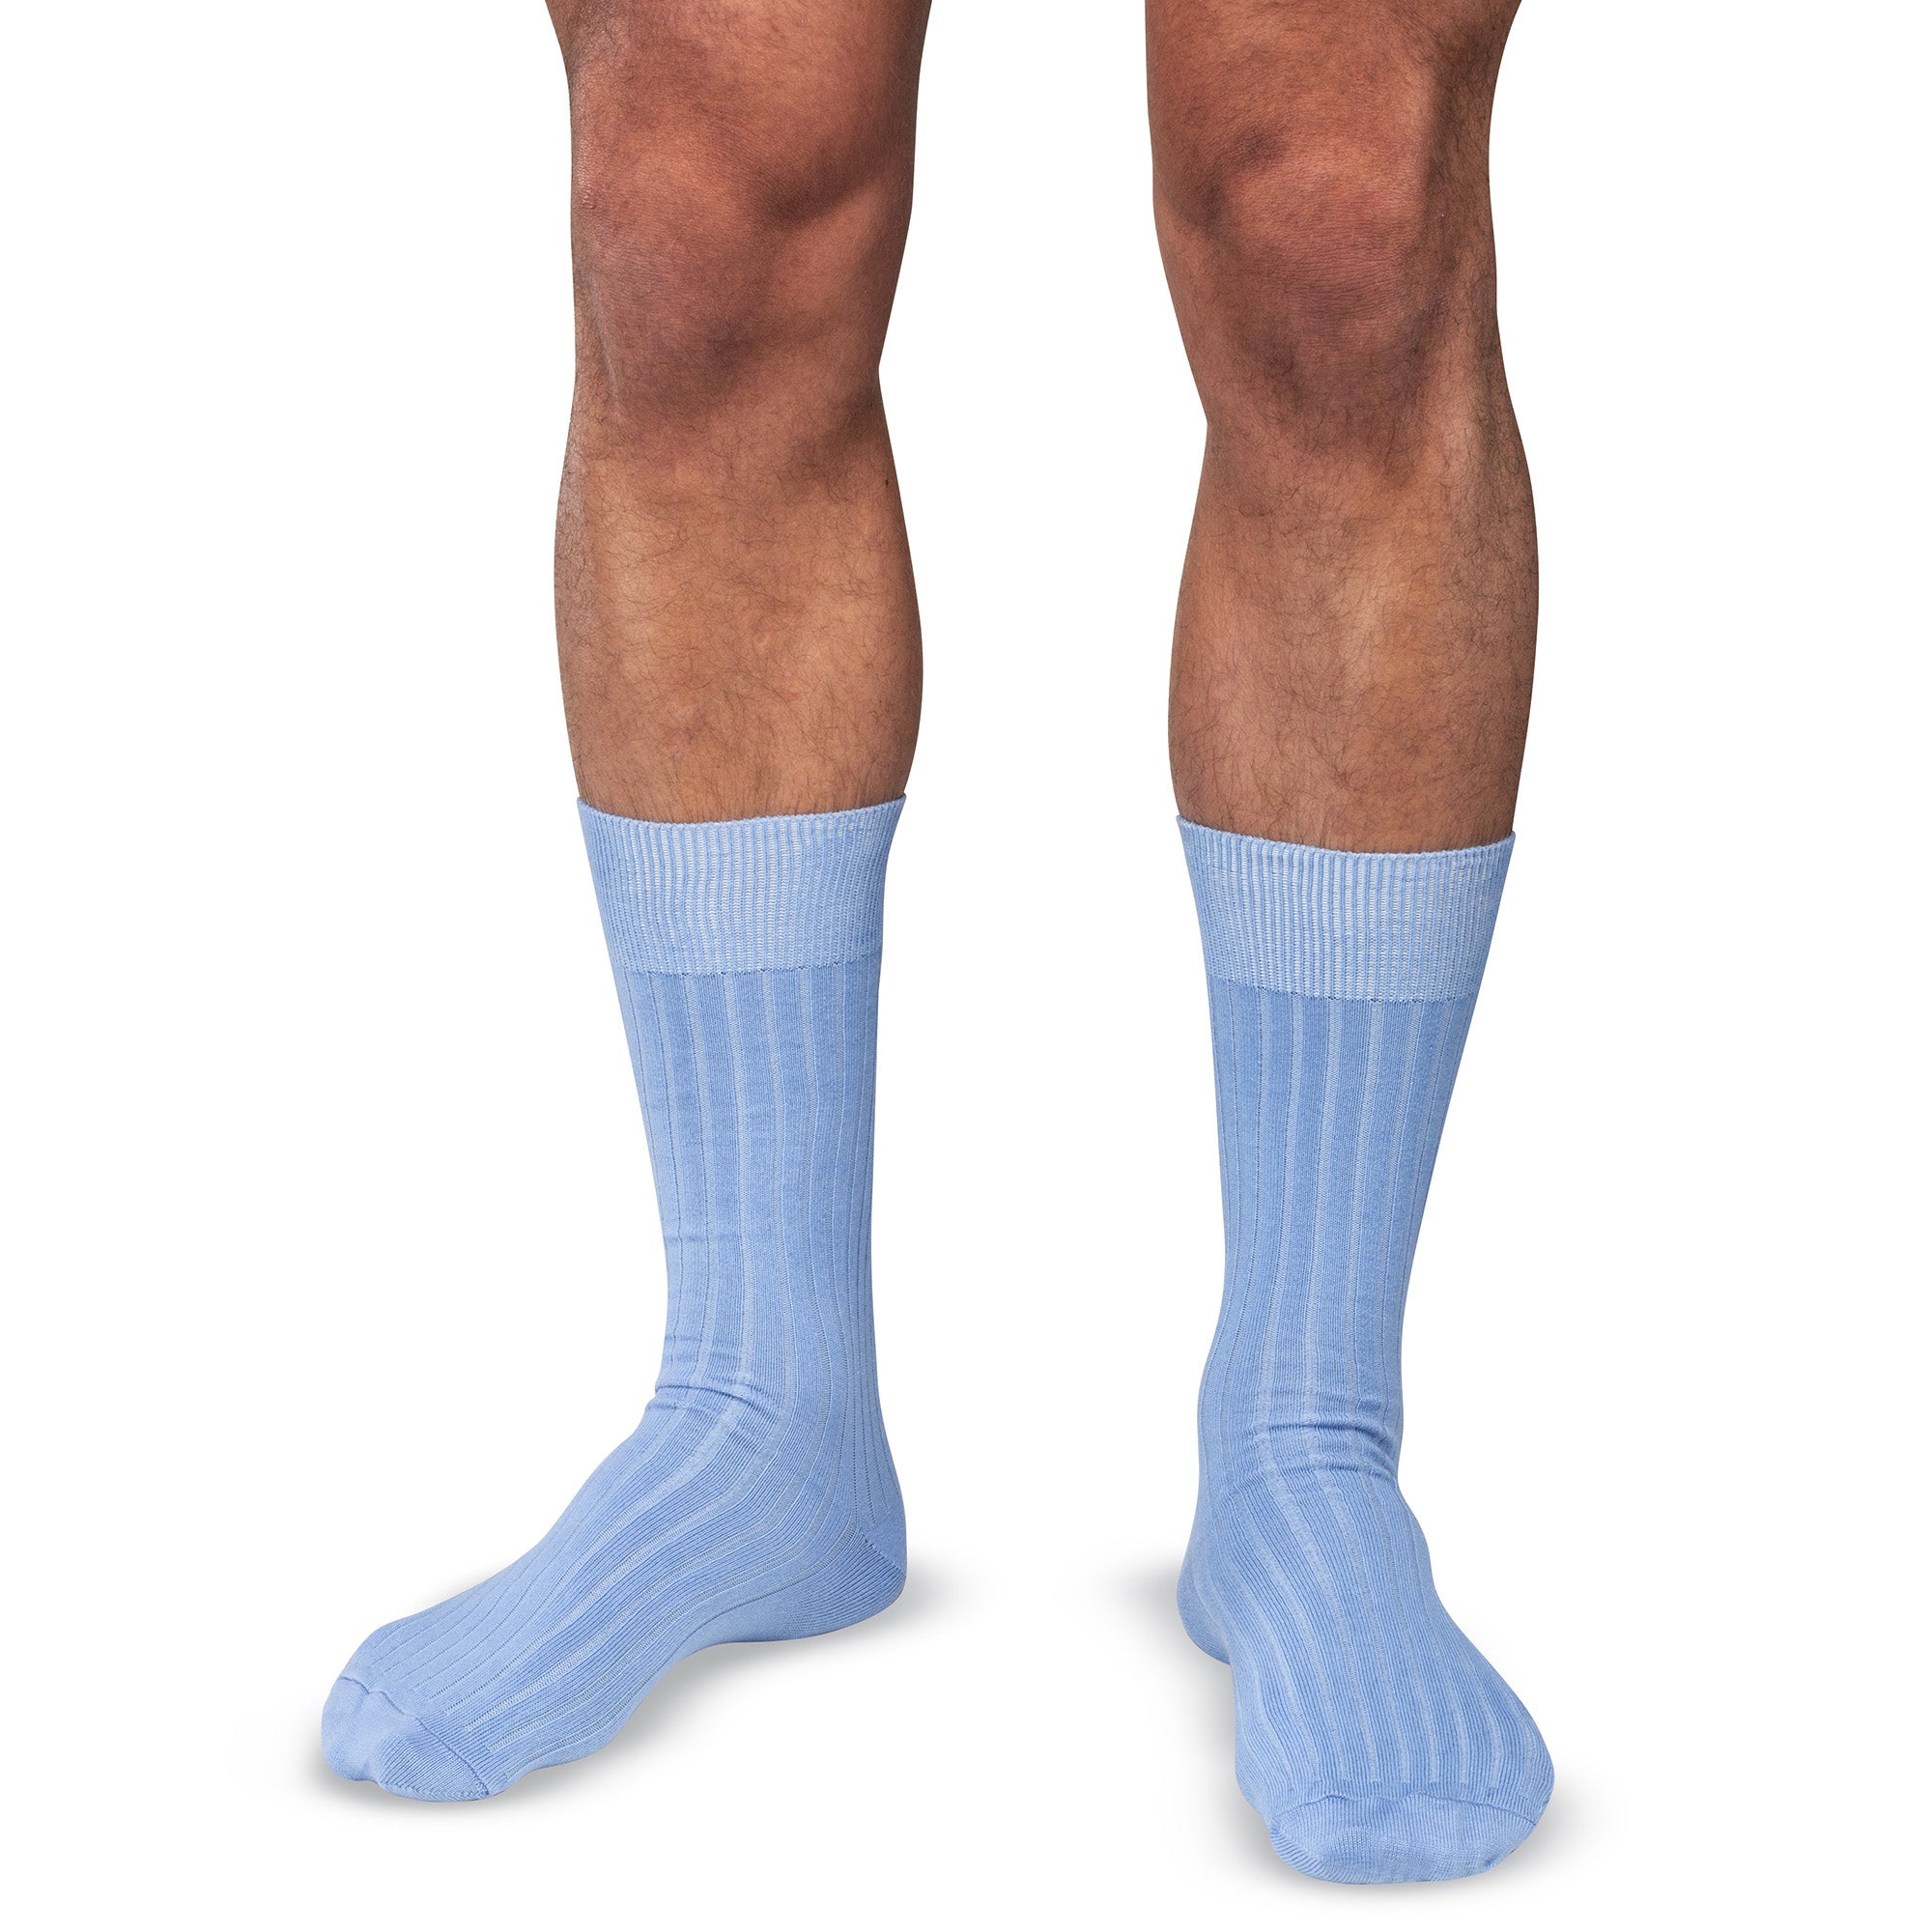 model wearing mid-calf length sky blue dress socks